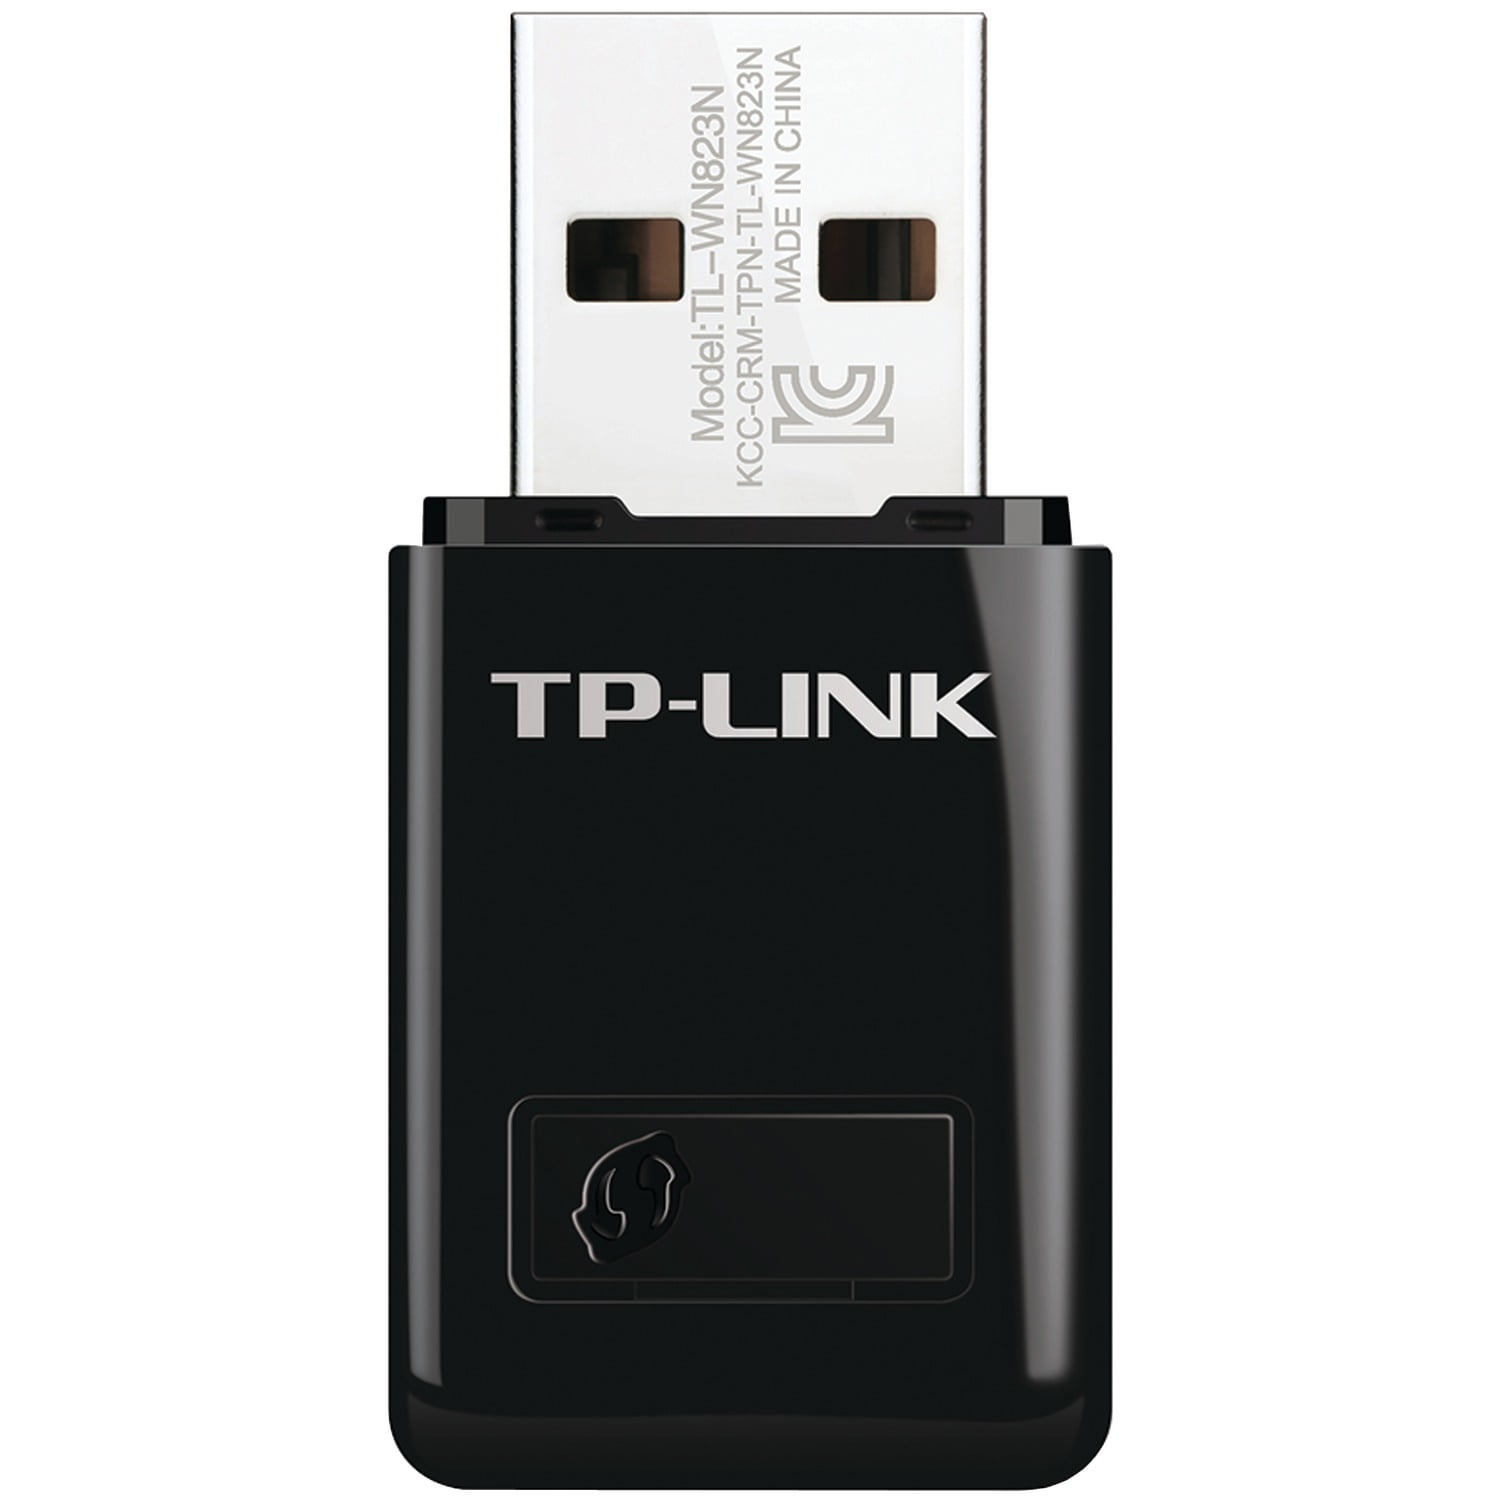 TP-LINK TL-WN823N Wireless N300 Mini USB Adapter 300Mbps w//WPS Button IEEE 80